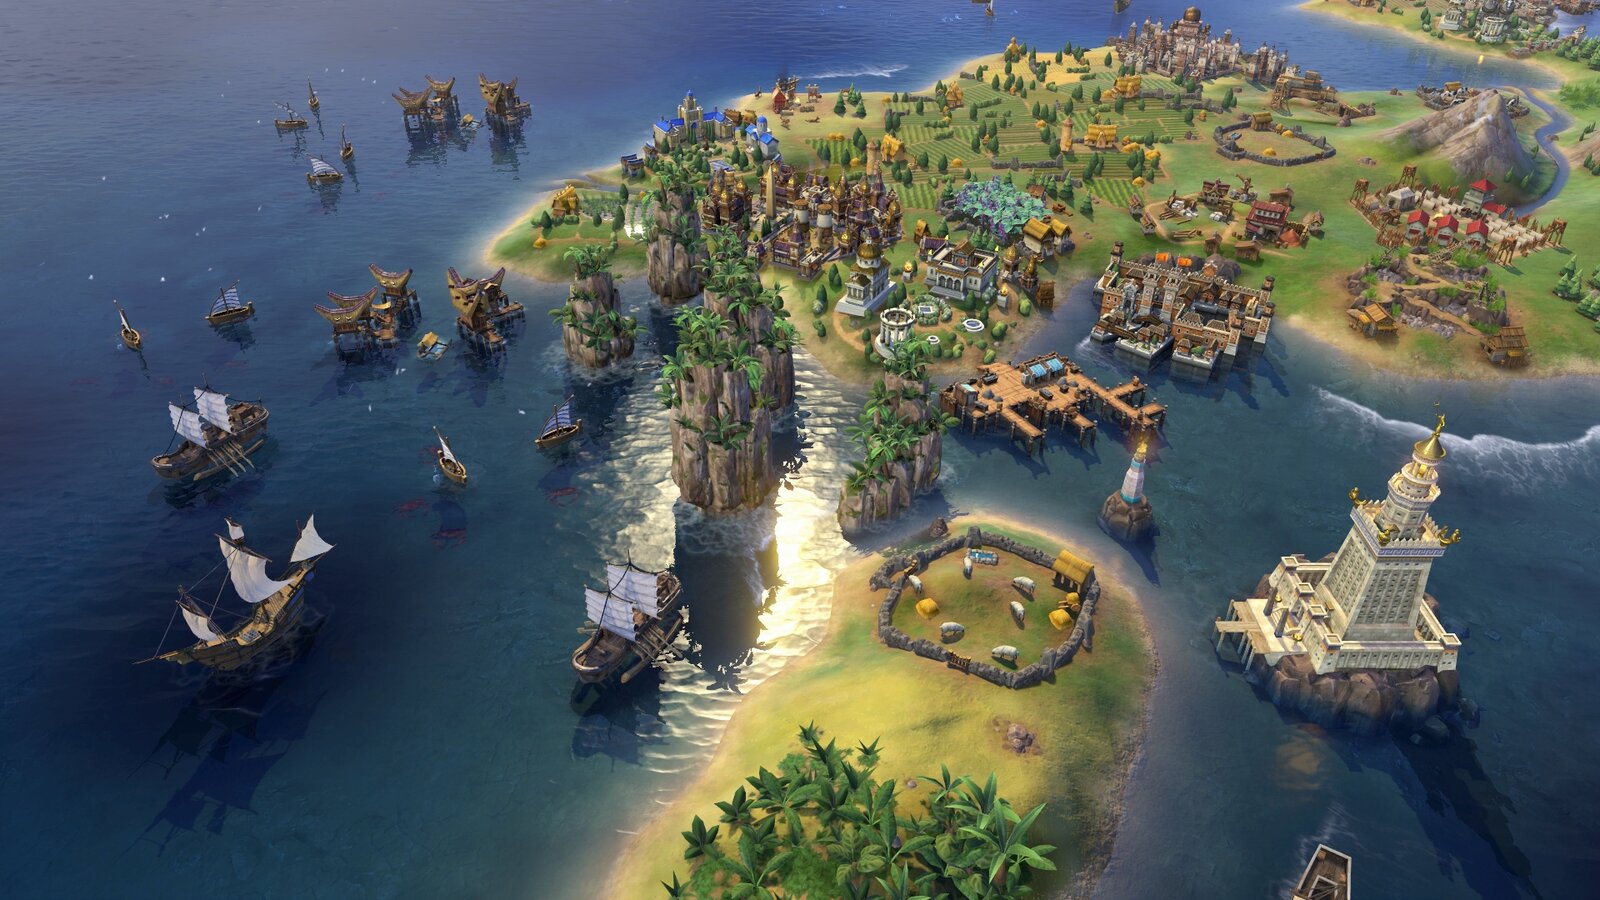 Sid Meier's Civilization VI - Khmer and Indonesia Civilization & Scenario Pack